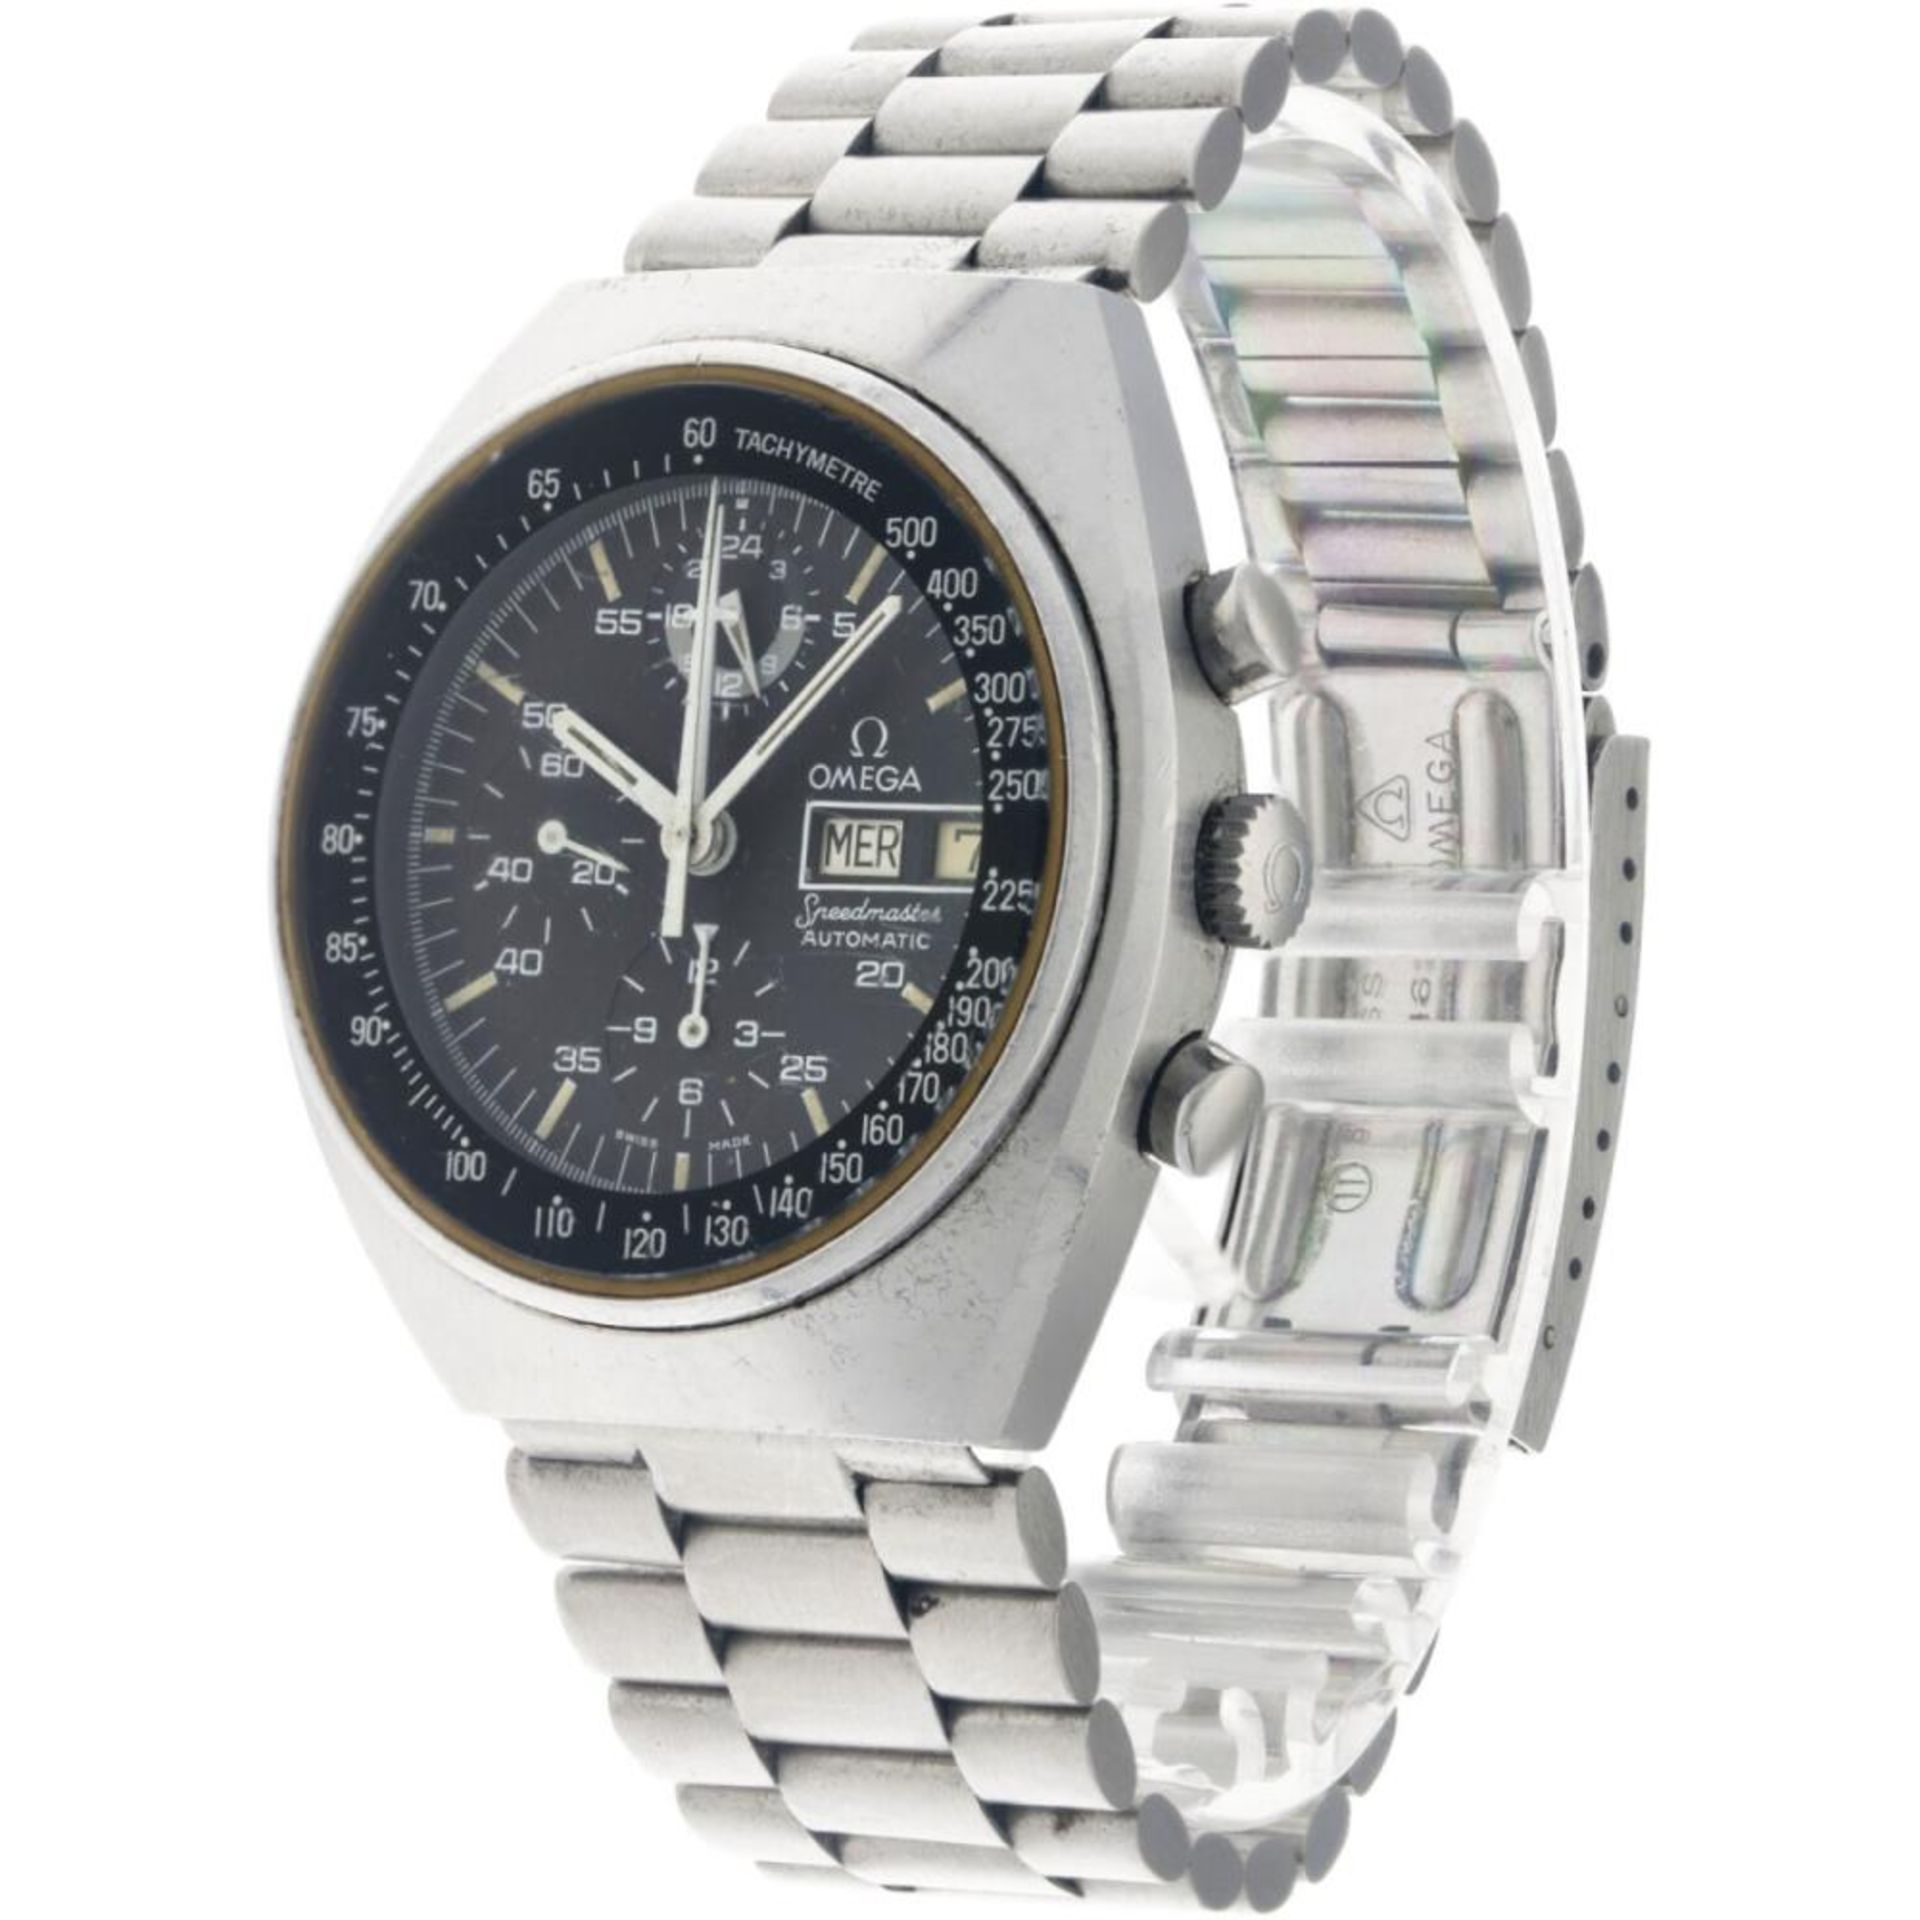 Omega Speedmaster mark 4.5 176.0012 - Men's watch - Approx. 1975. - Image 2 of 5